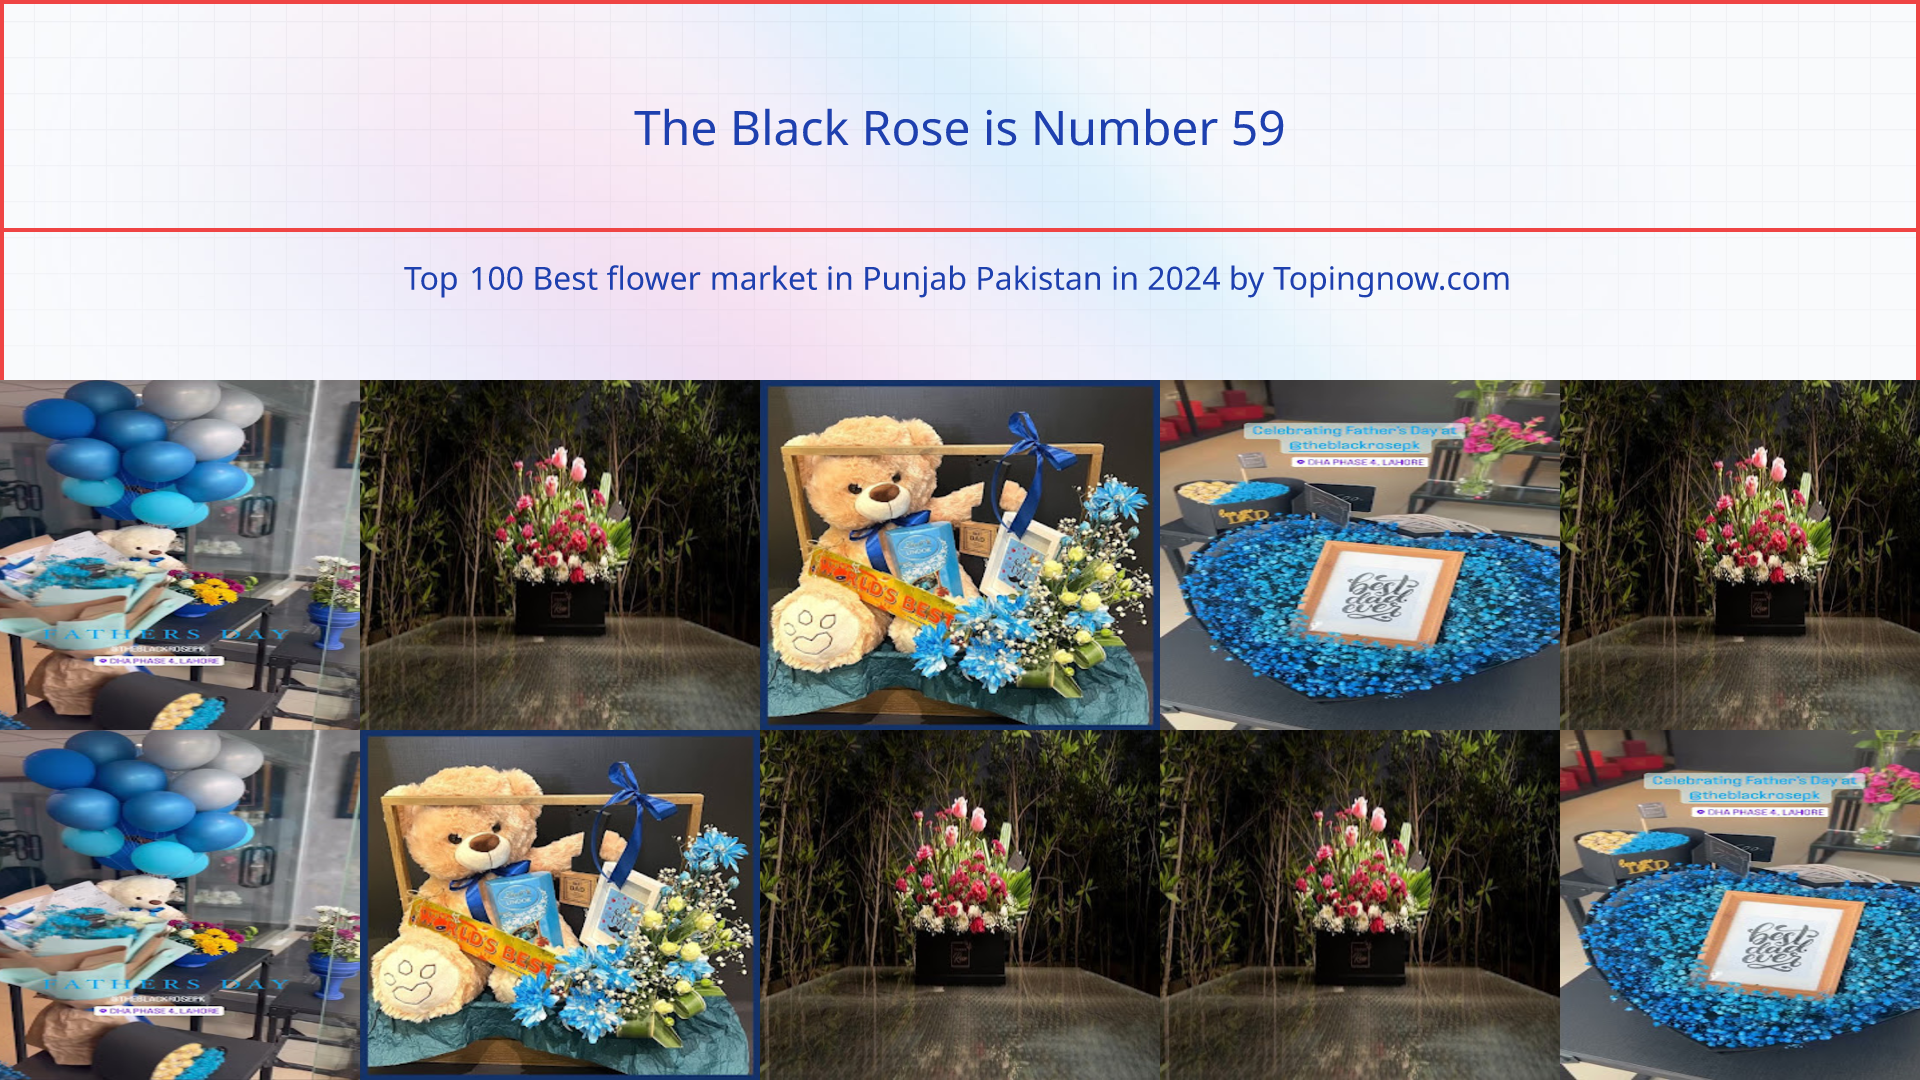 The Black Rose: Top 100 Best flower market in Punjab Pakistan in 2024